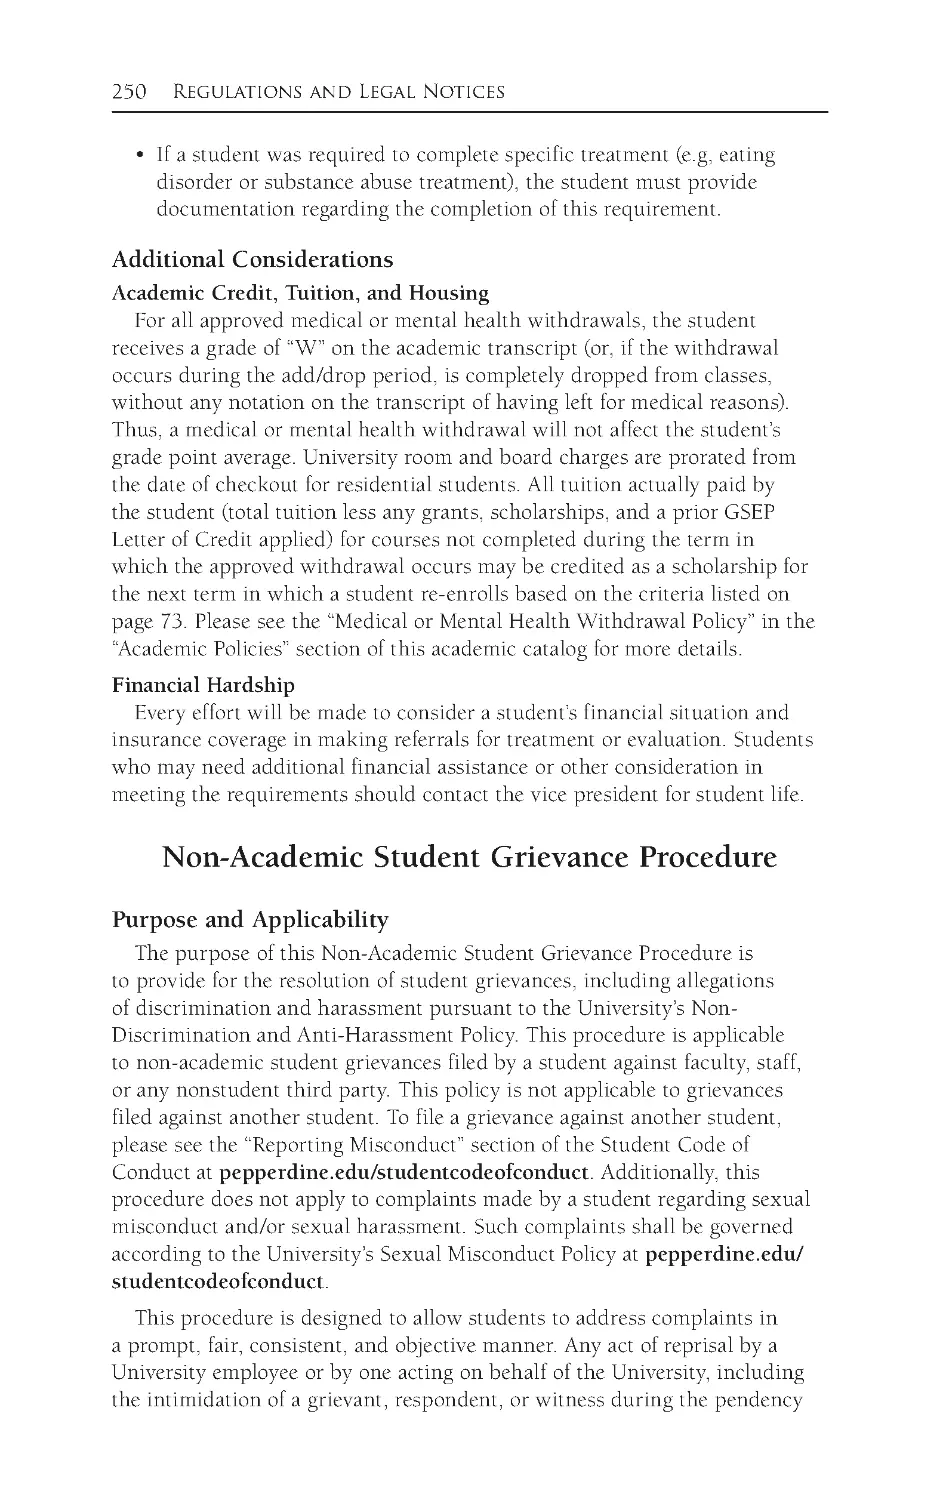 Non-Academic Student Grievance Procedure